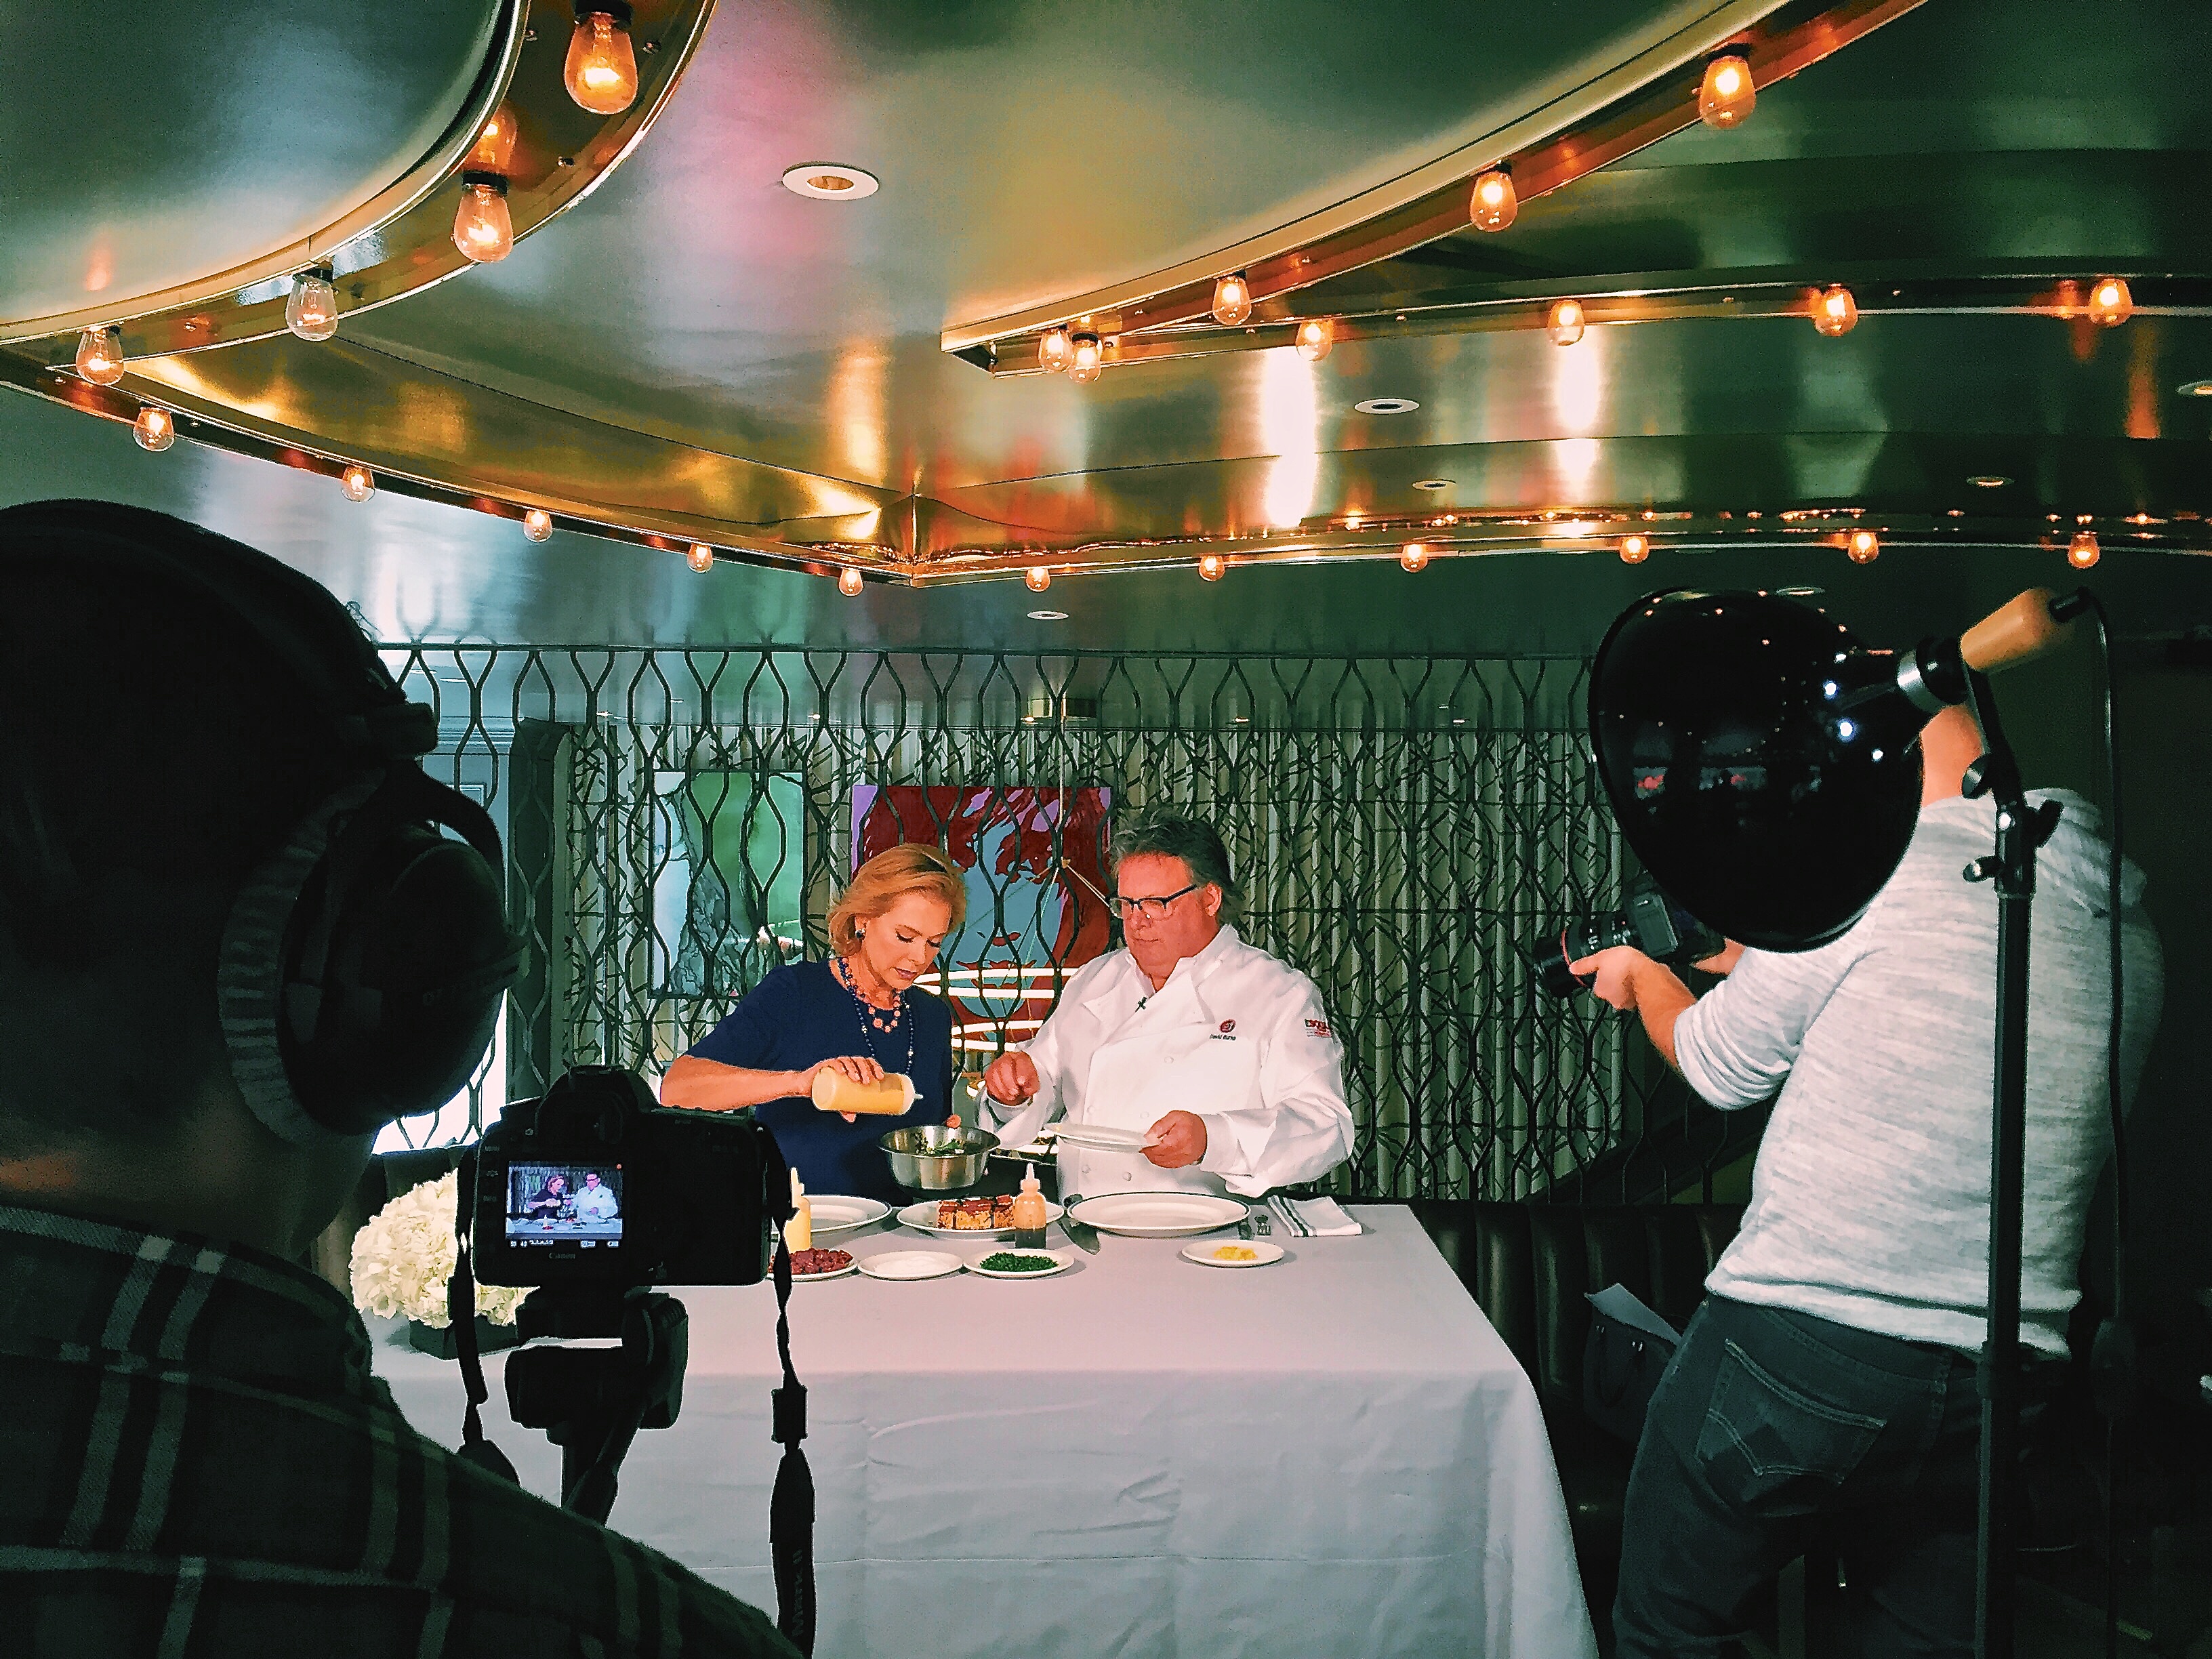 Behind the Scene shot of Pamela and Chef David Burke Cooking